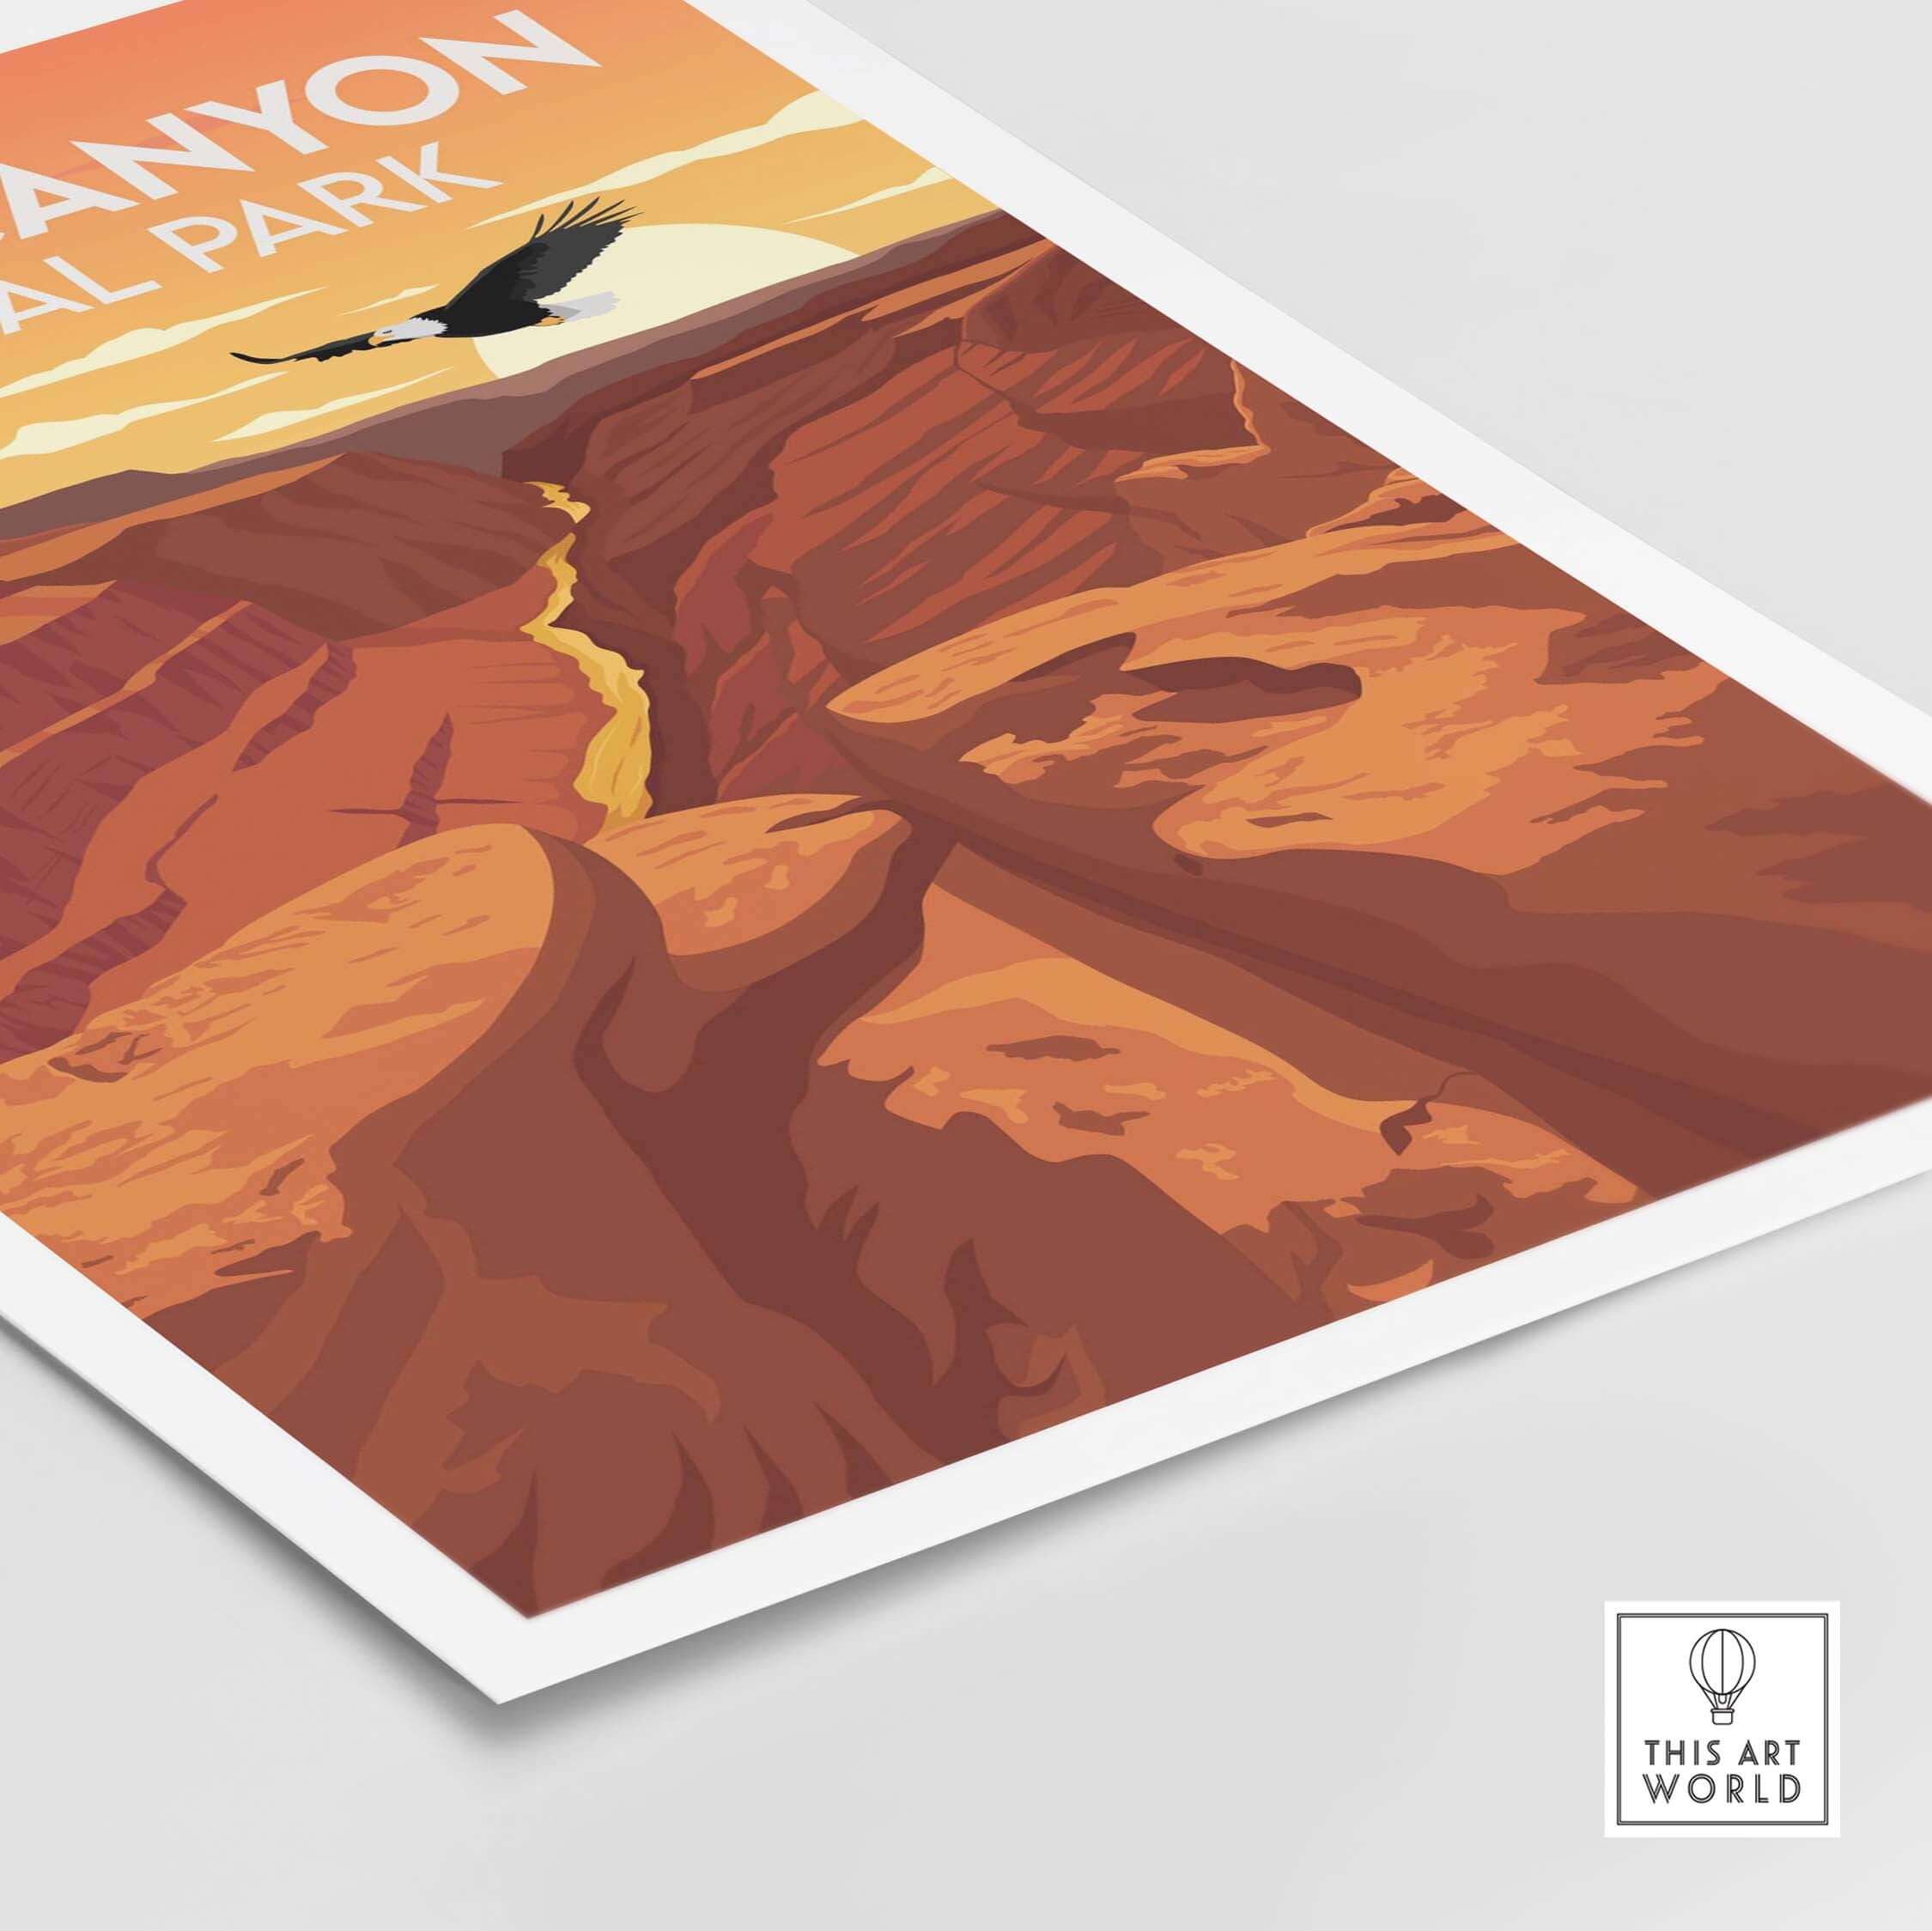 grand canyon print | national park poster